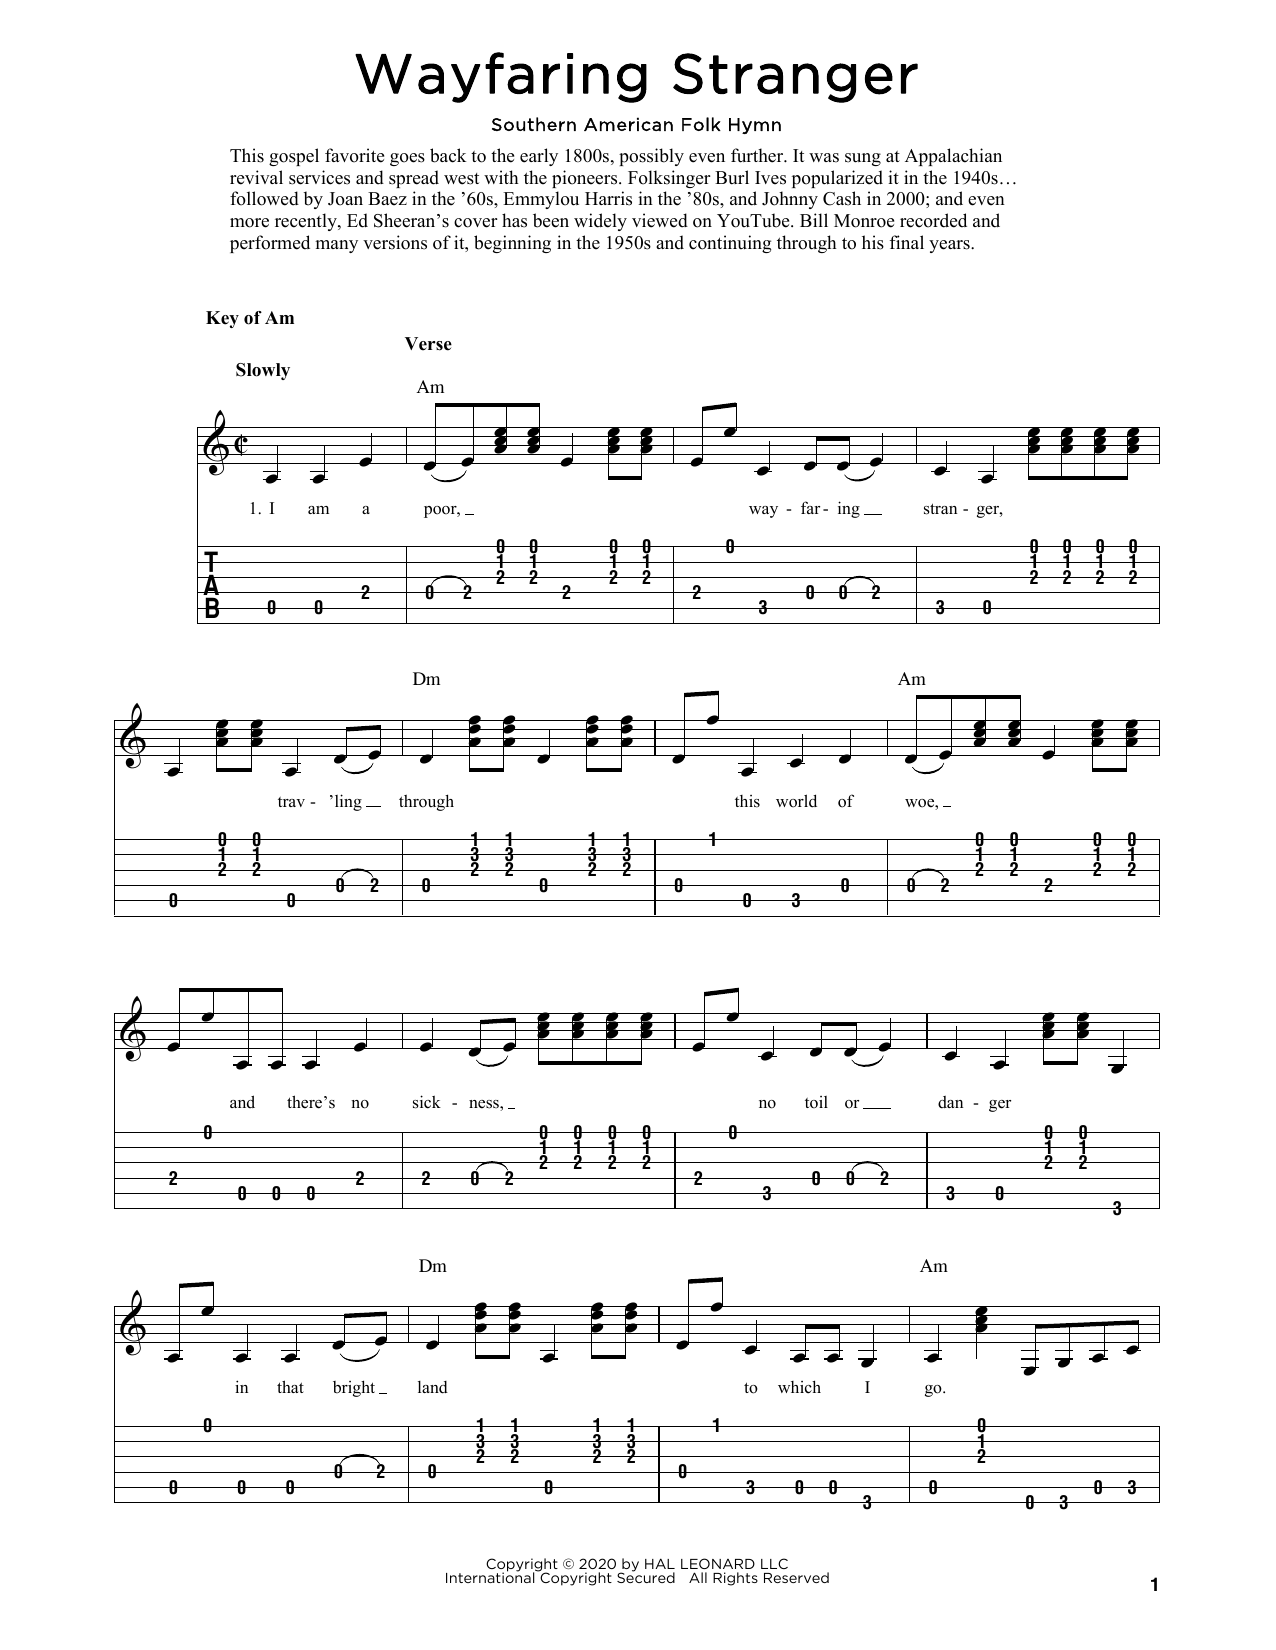 Southern American Folk Hymn Wayfaring Stranger (arr. Fred Sokolow) sheet music notes and chords arranged for Banjo Tab